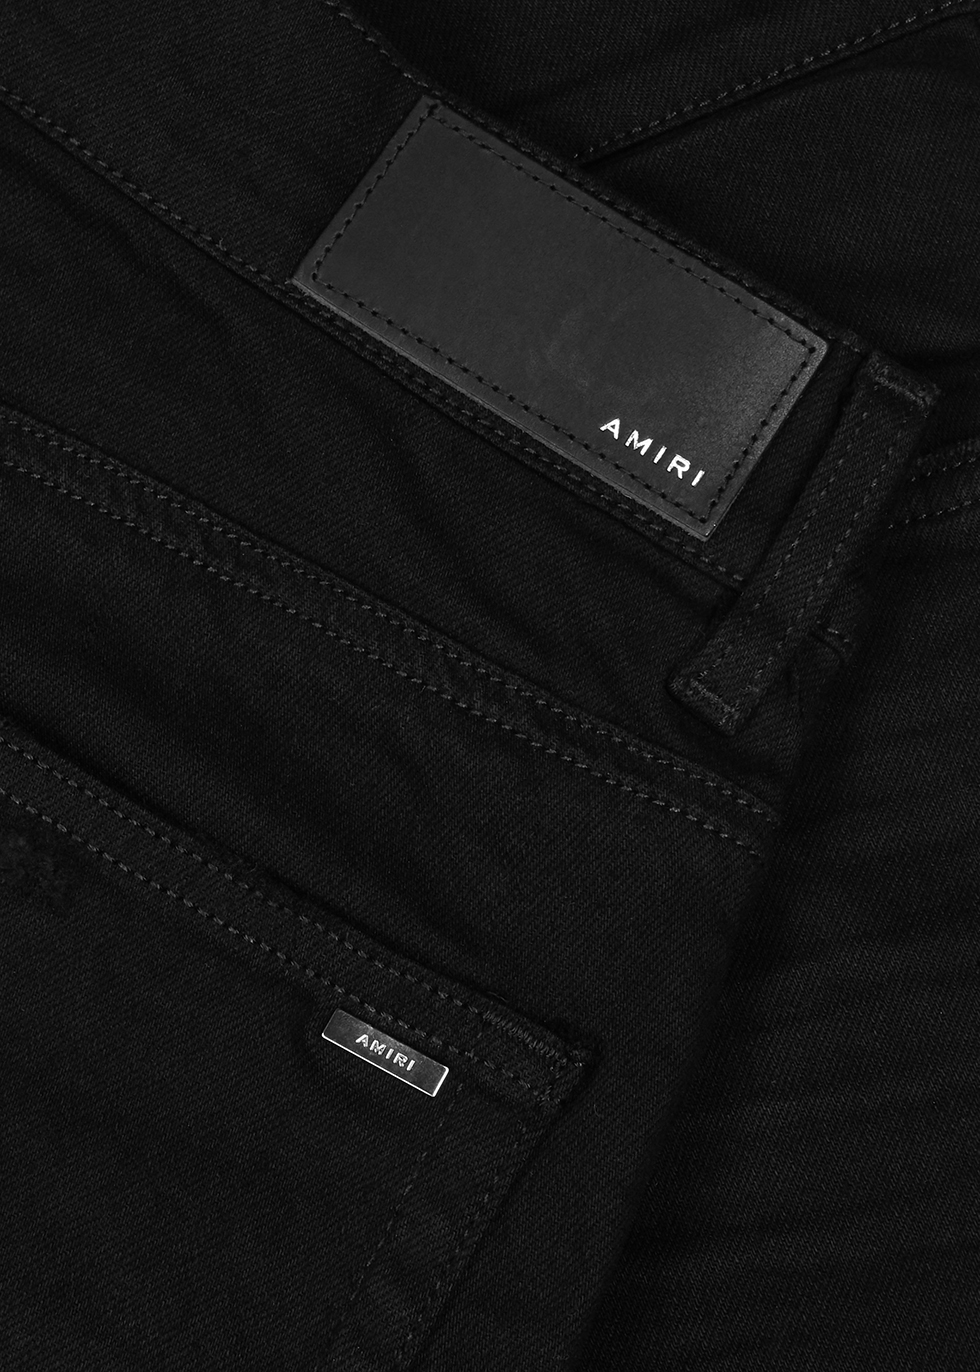 black and white amiri jeans